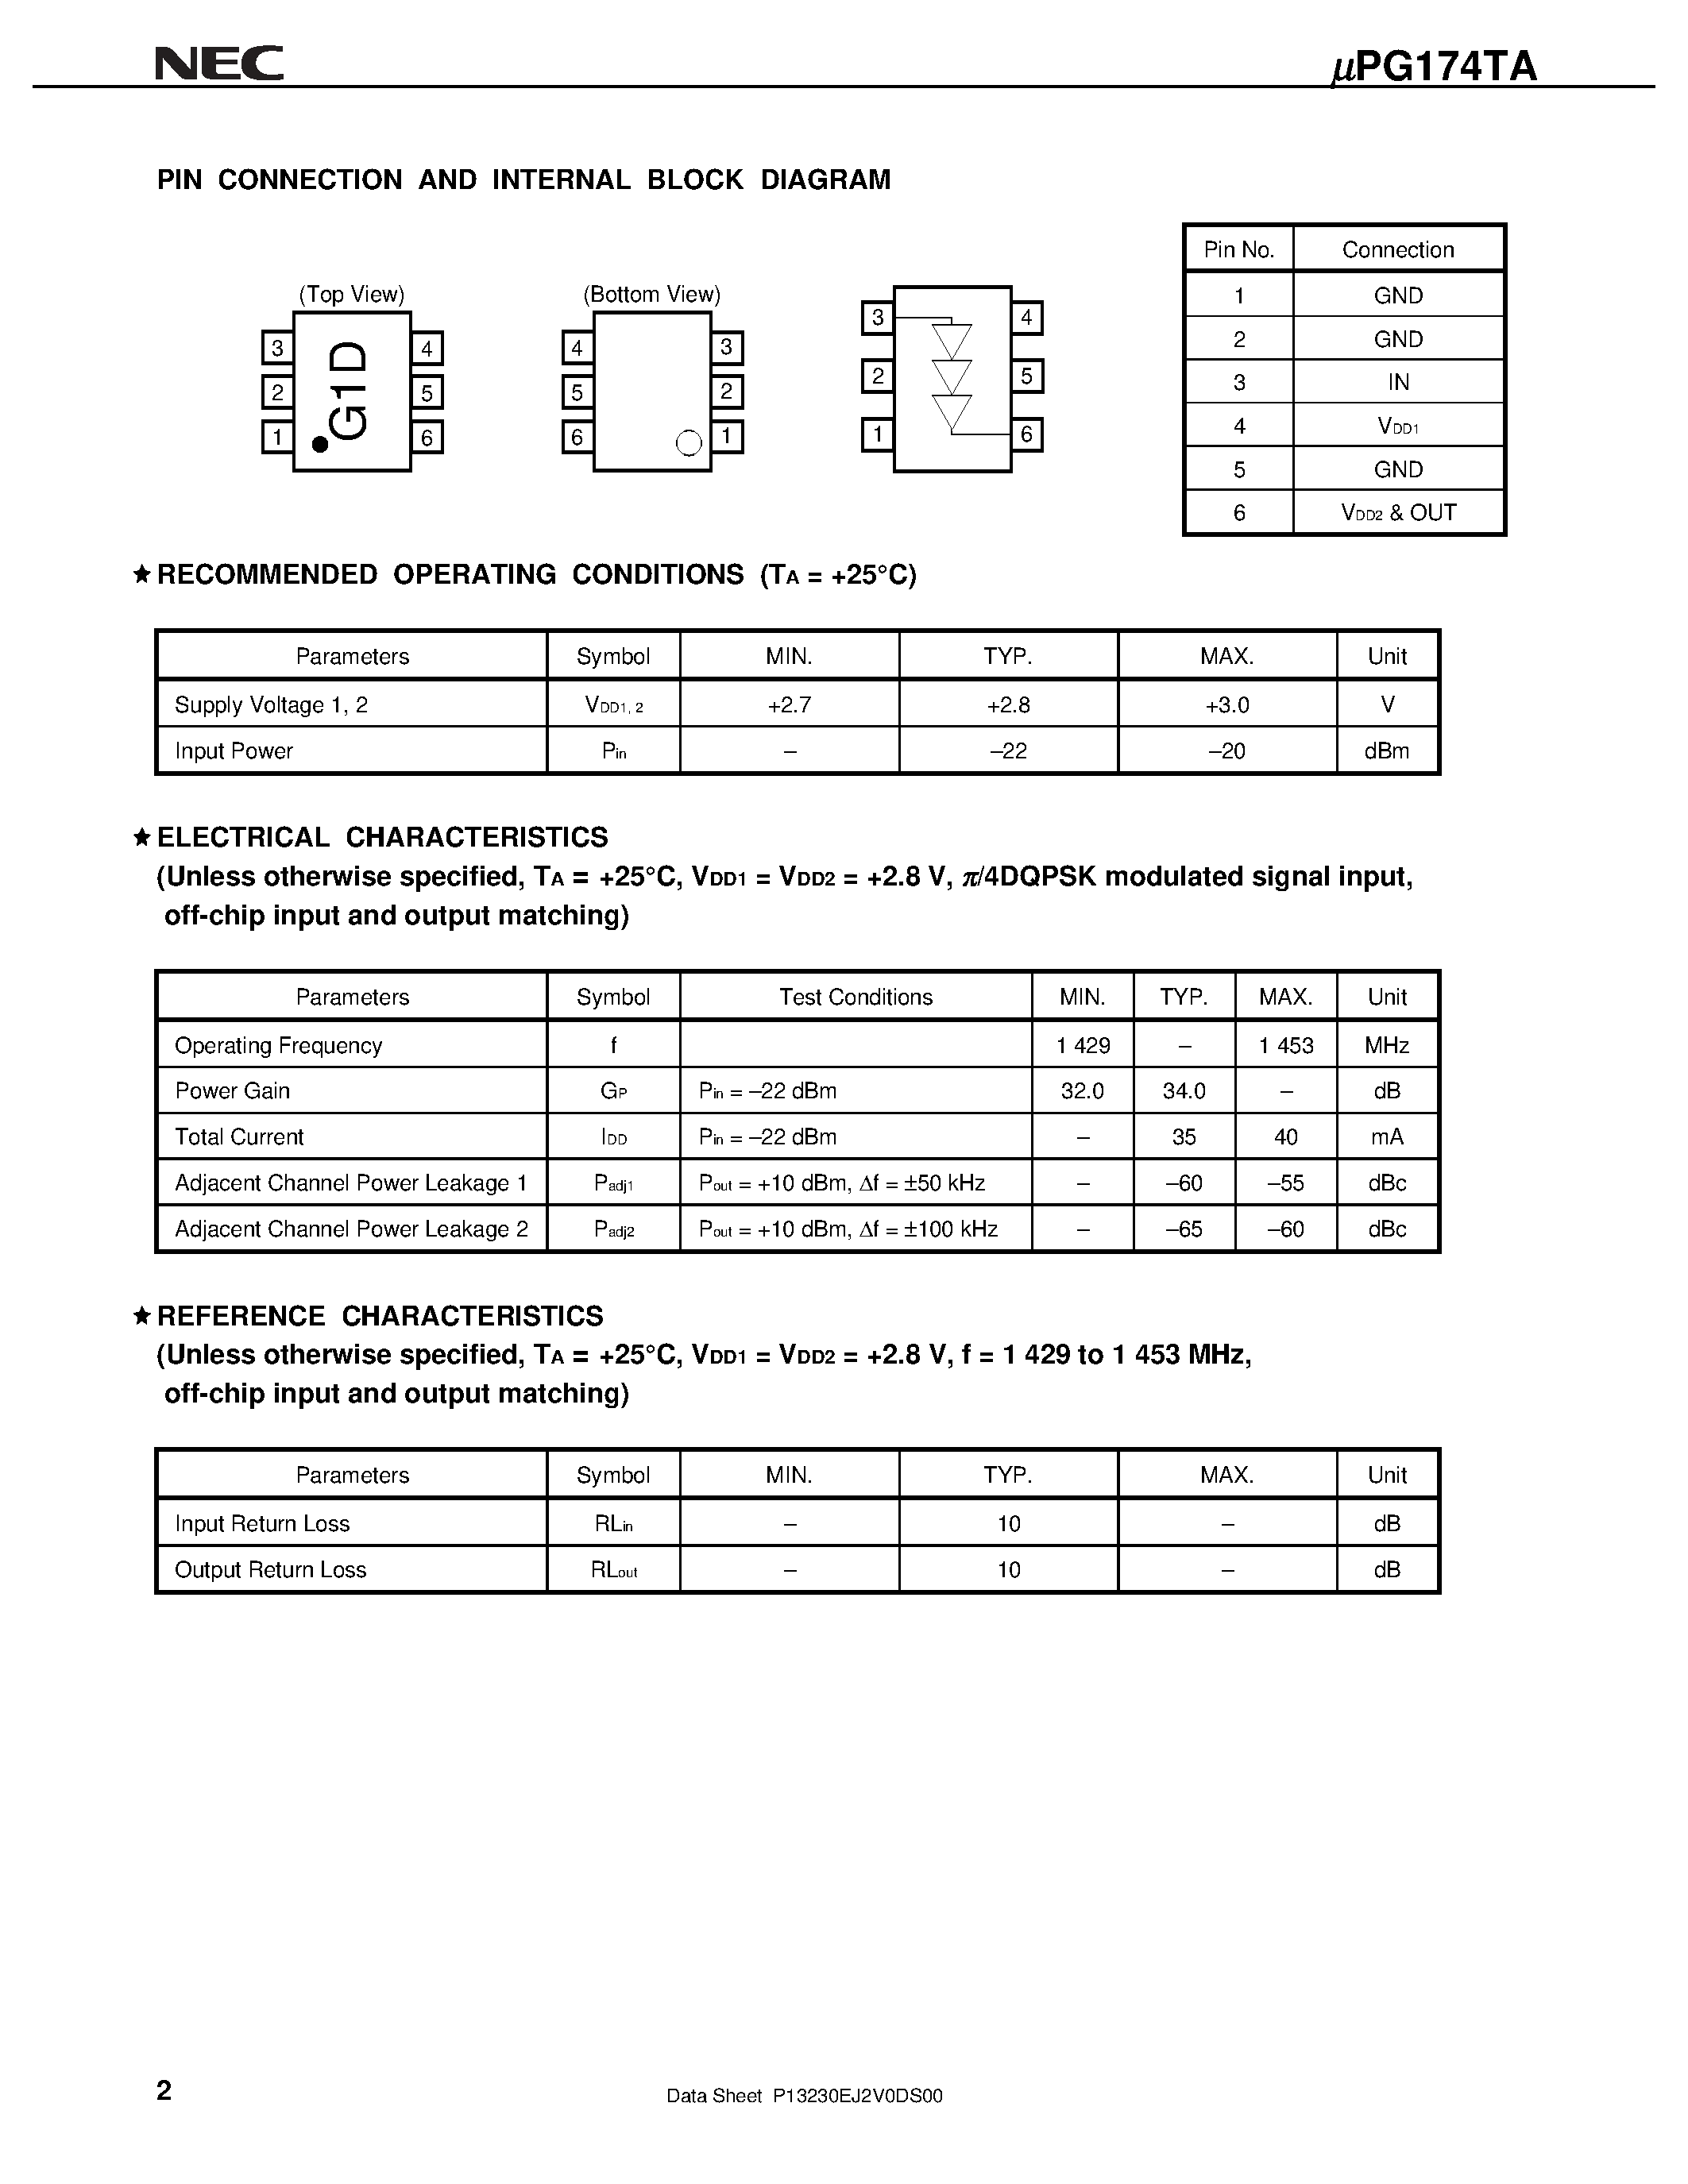 Datasheet UPG174TA - L-BAND PA DRIVER AMPLIFIER page 2